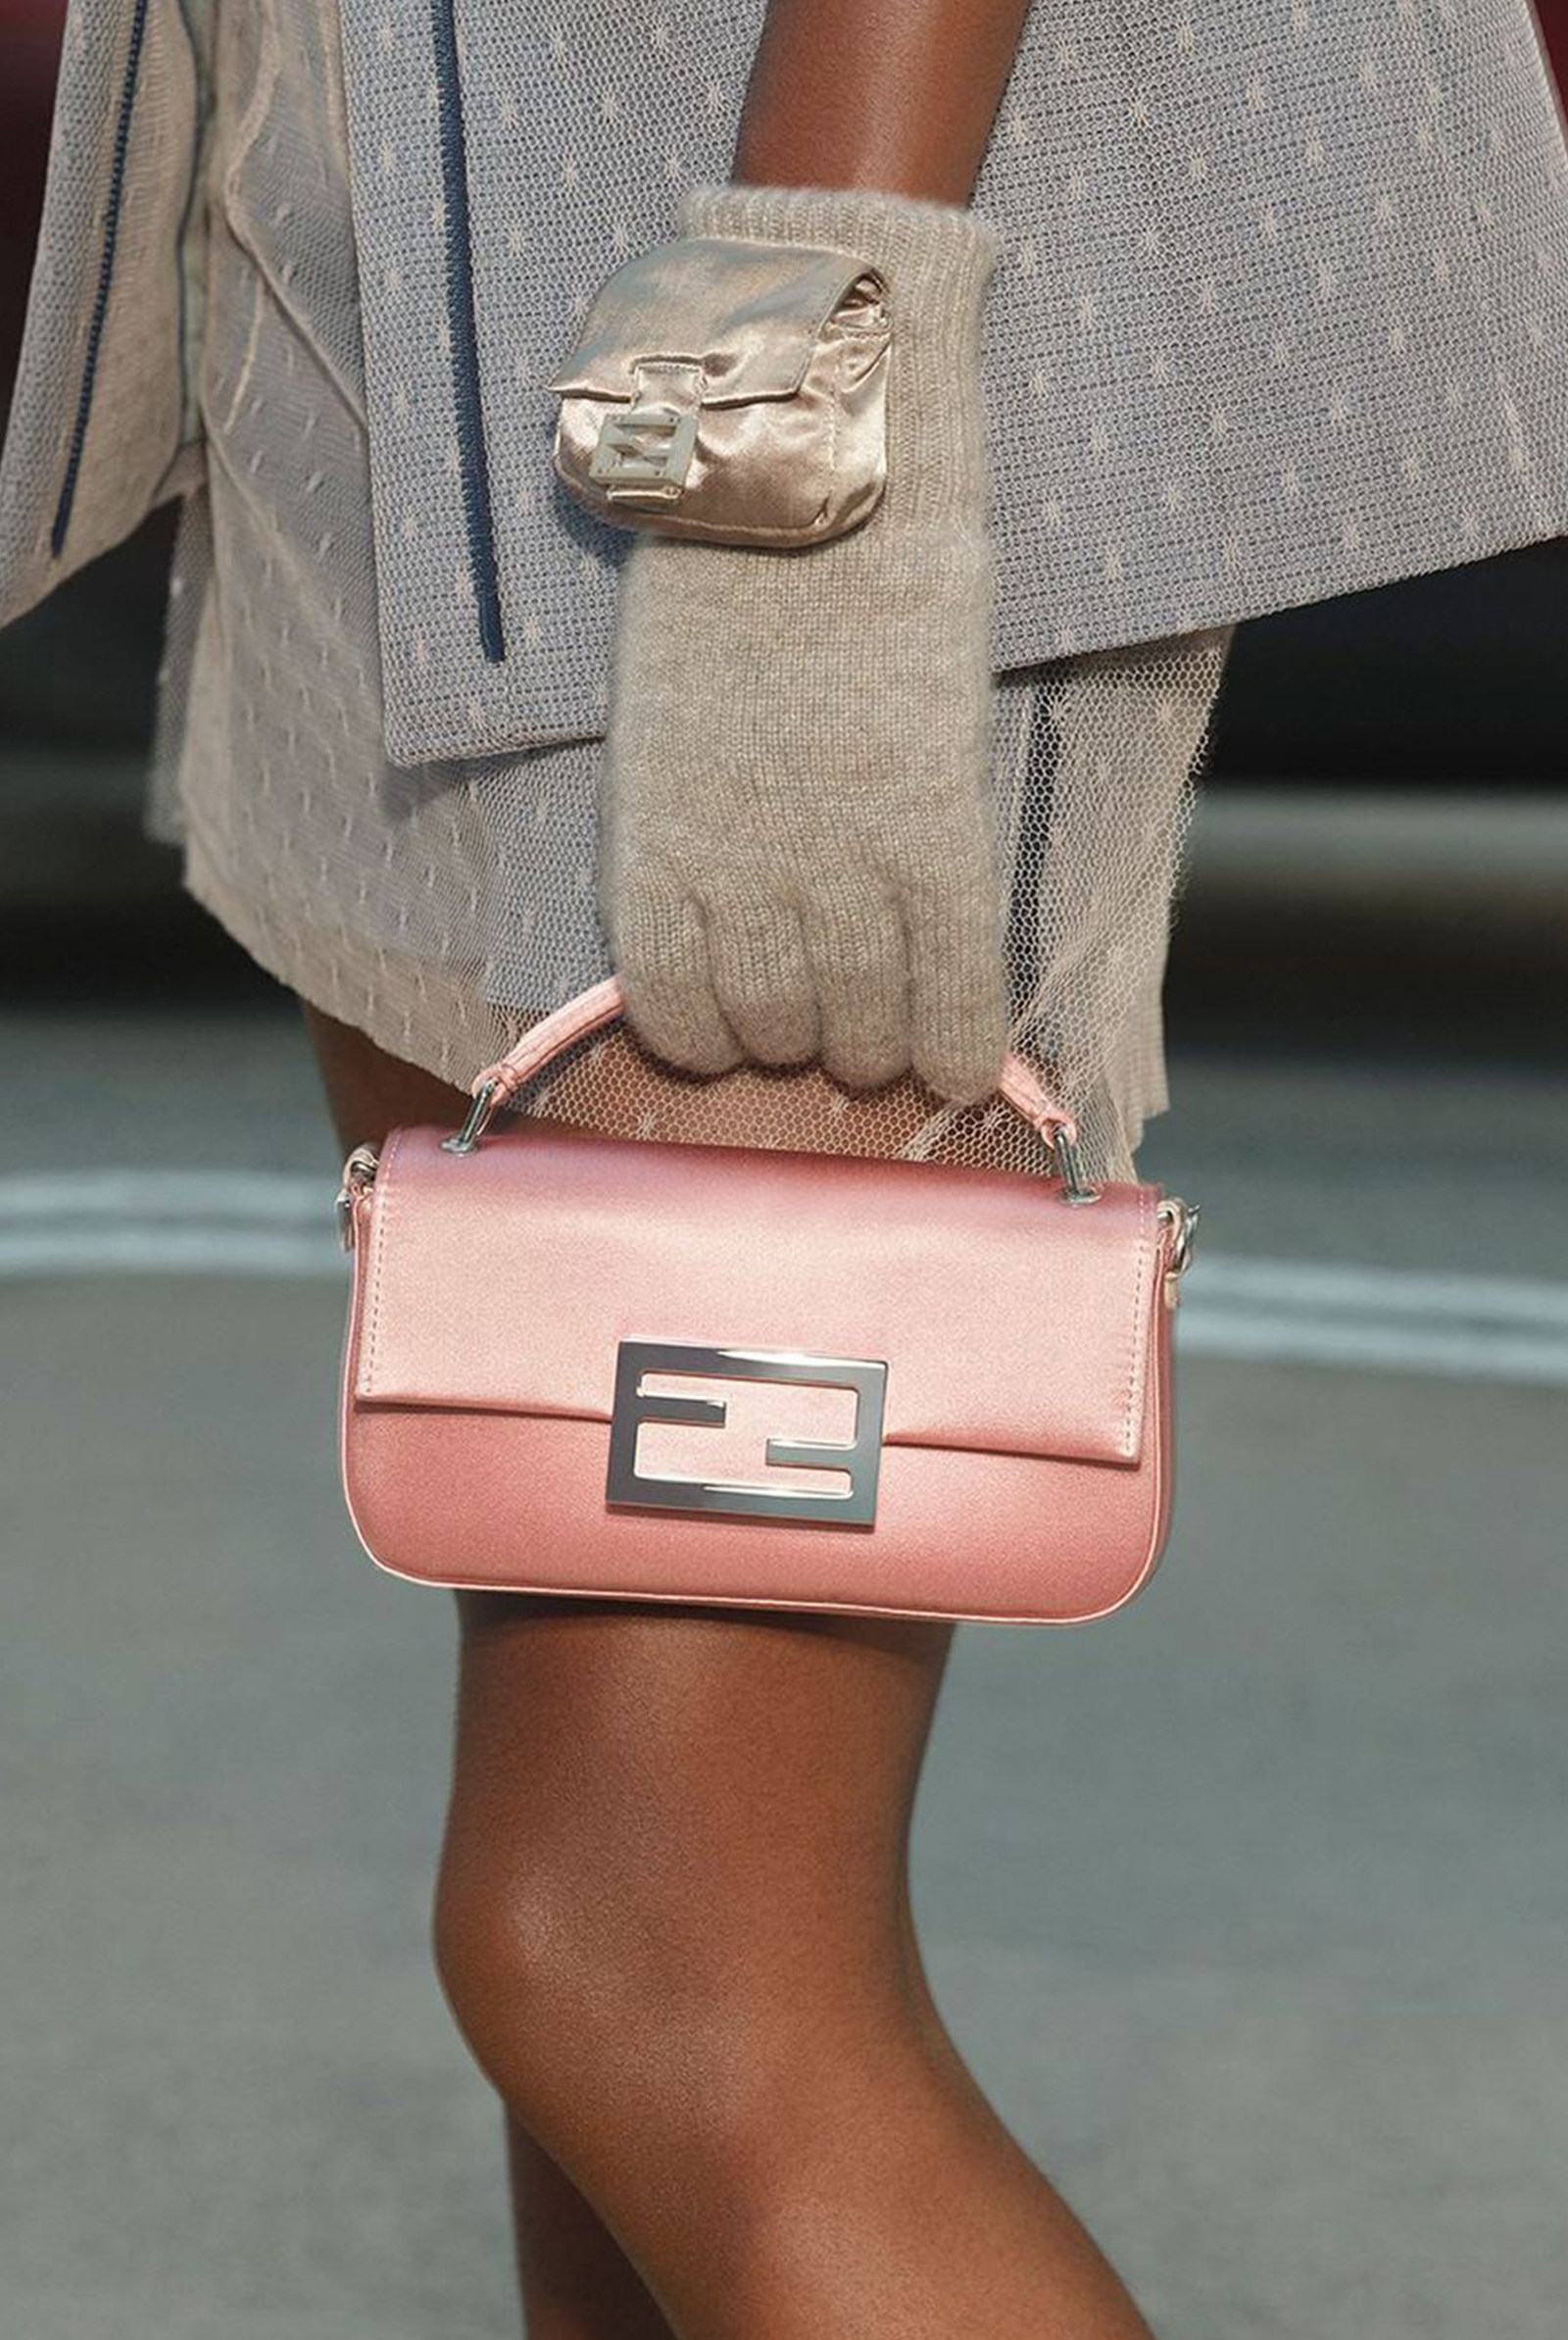 Sarah Lahbati's Exact Trendy Nylon Prada Bag